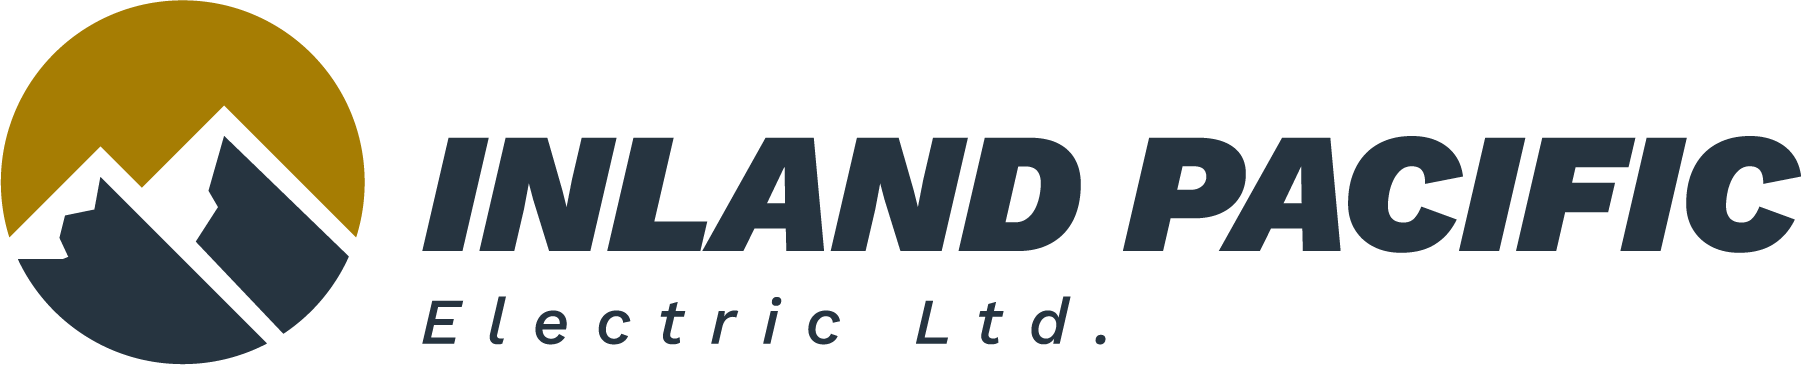 Inland Pacific Electric Ltd.